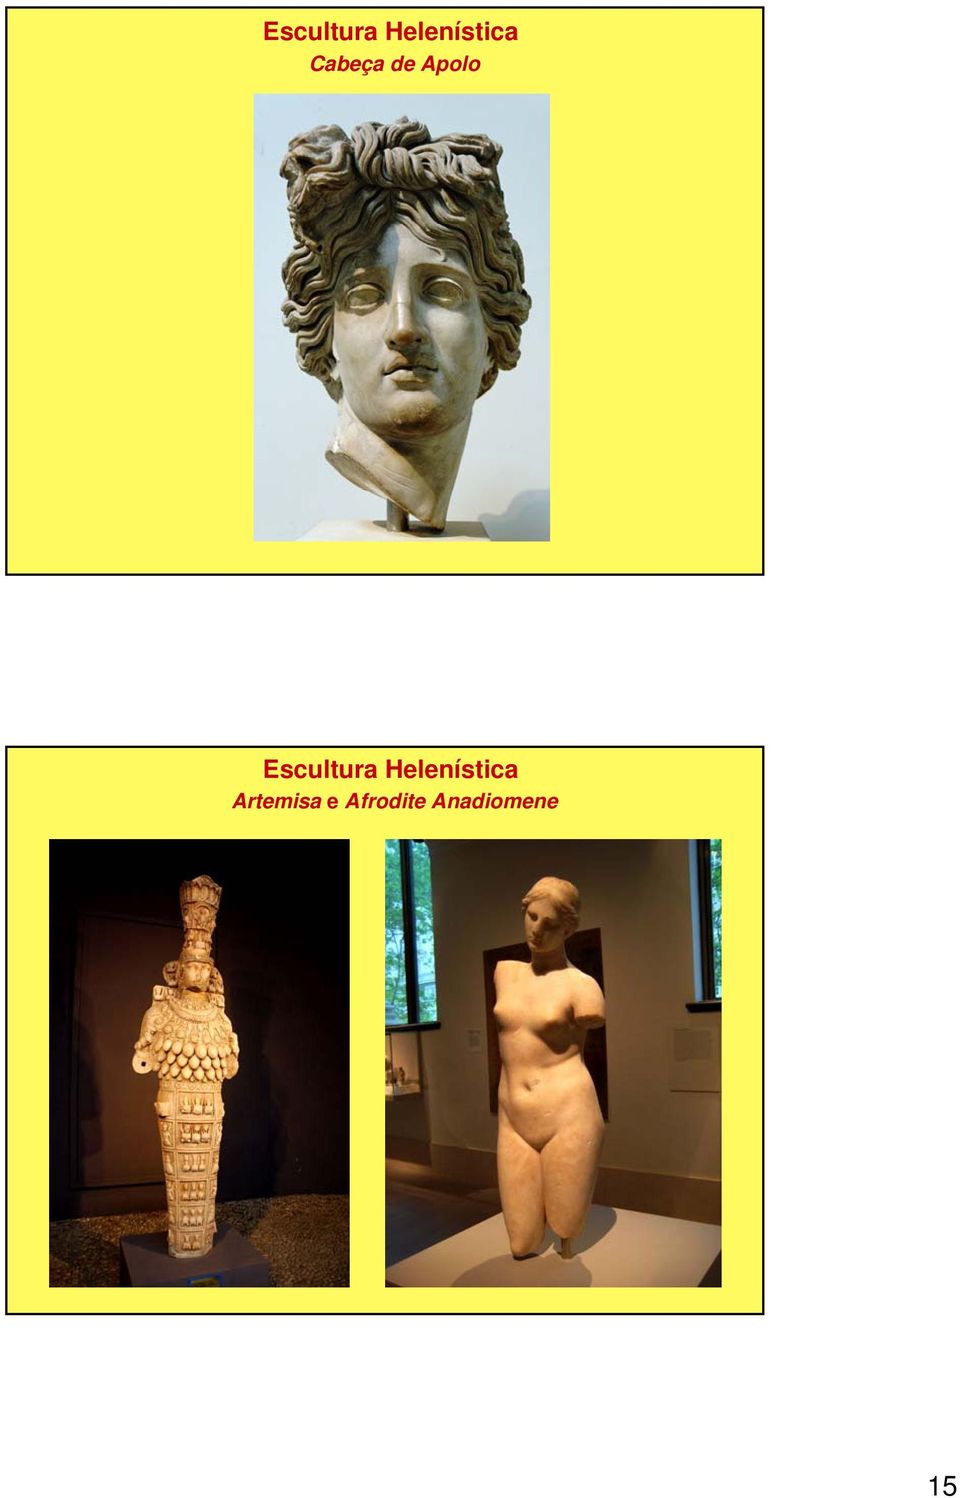 Artemisa e Afrodite